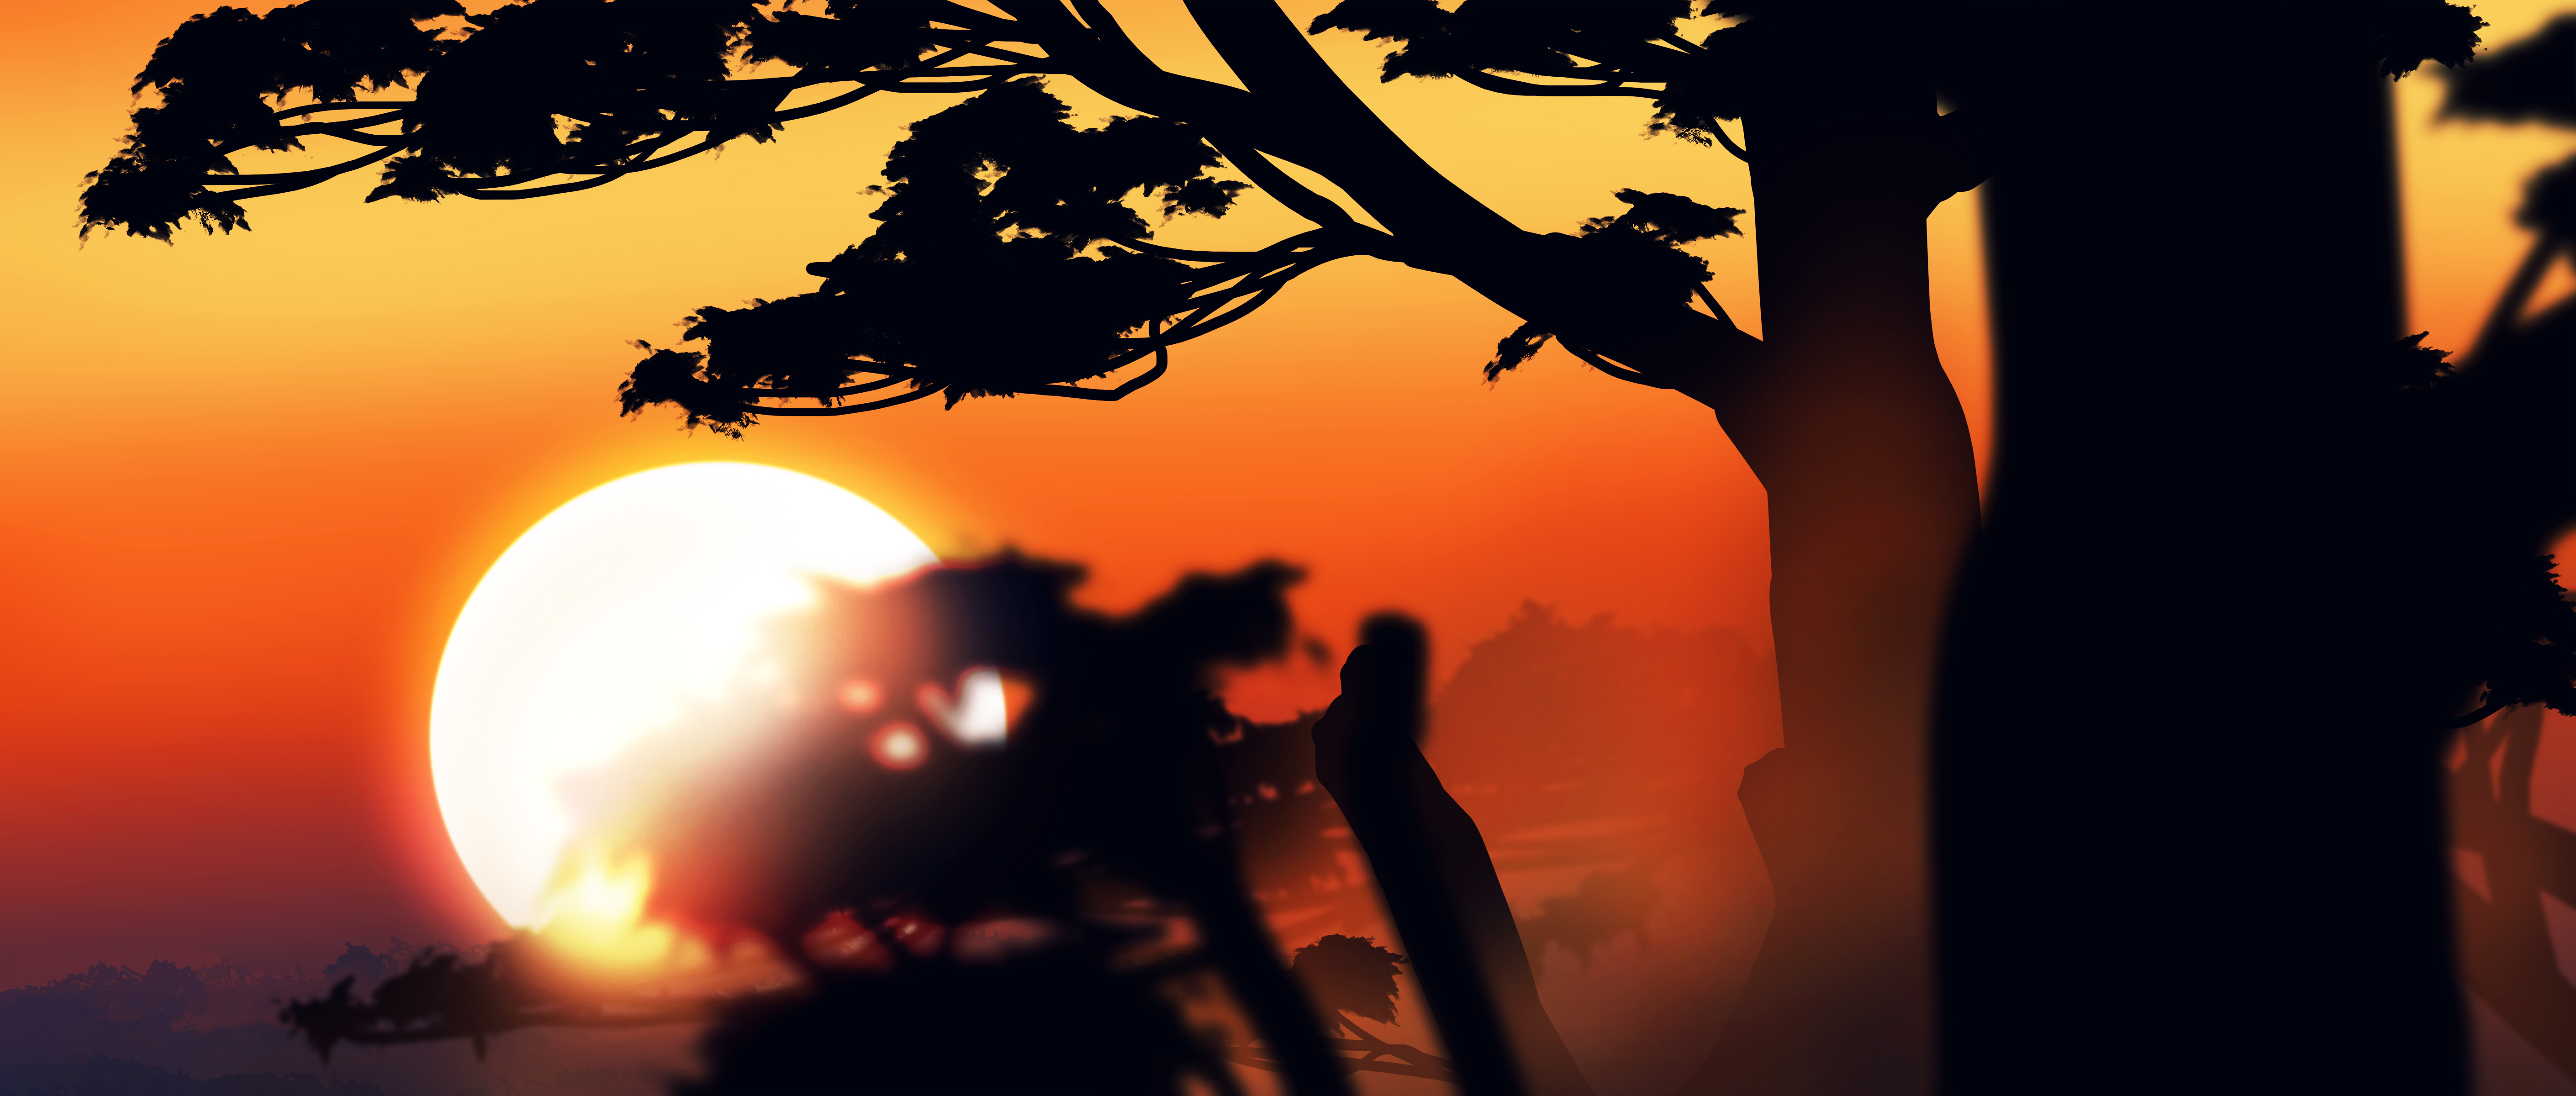 Gracile Digital Art Artwork Illustration Ultrawide Wide Screen Trees Sun Sky Sunset 5640x2400